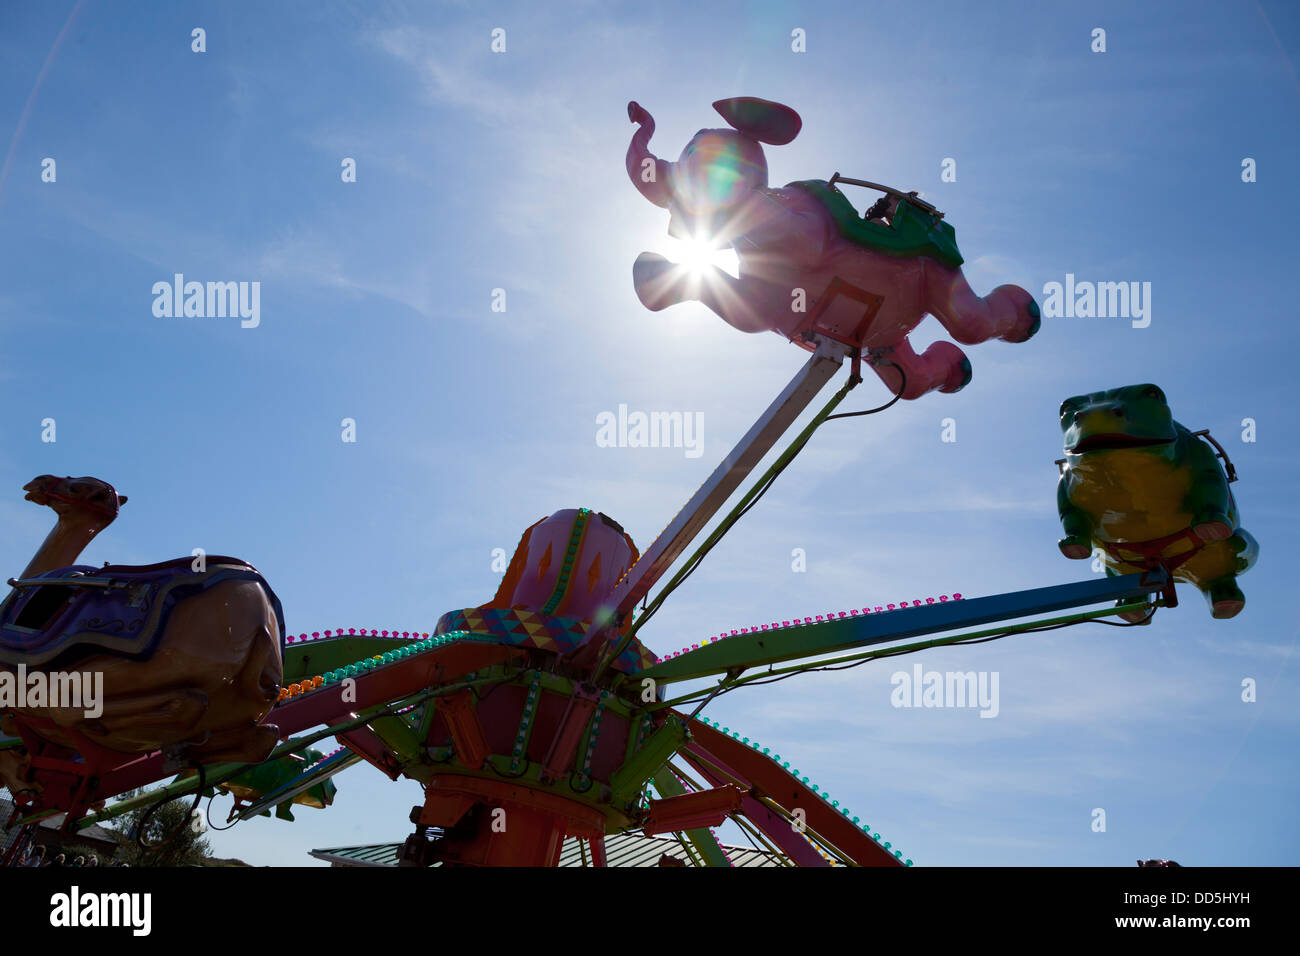 sunburst through flying fantasy animal ride fairground ride Stock Photo